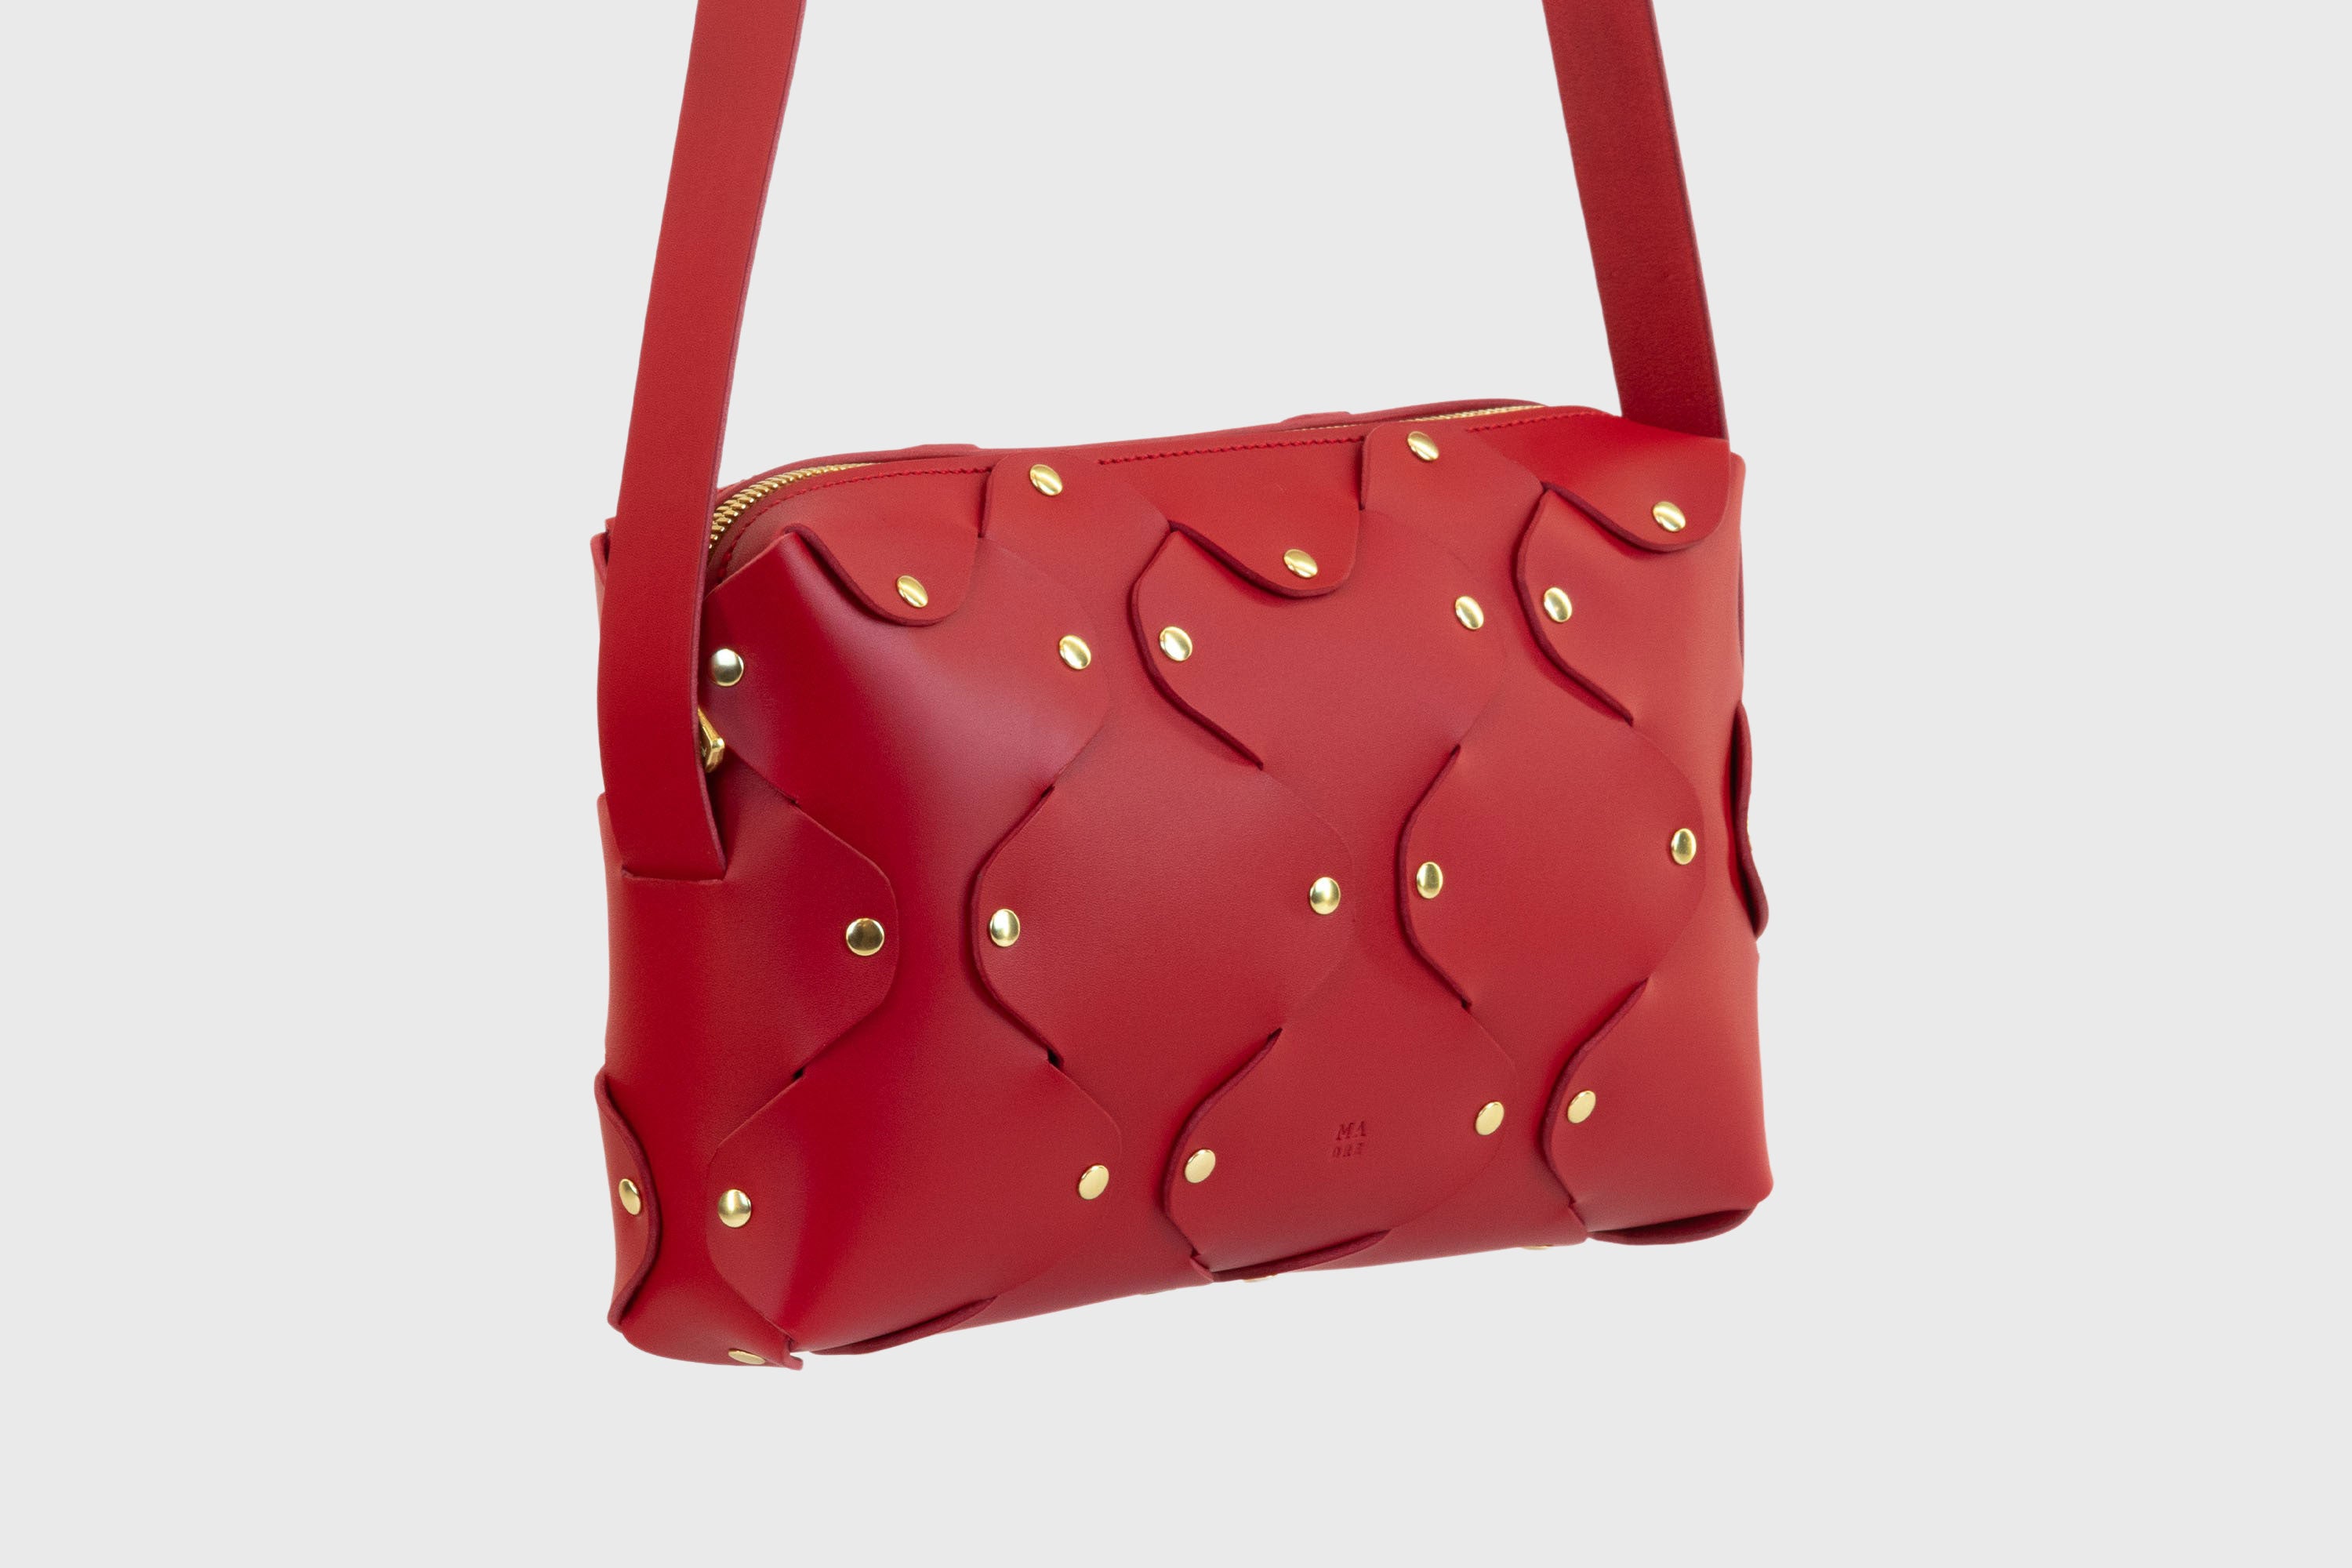 Marlin Leather Bag Red Color Quality Brass Rivet Designer Minimal Square Zipper Pouch Crossbody Handbag Clutch Shoulder Atelier Madre Manuel Dreesmann Barcelona